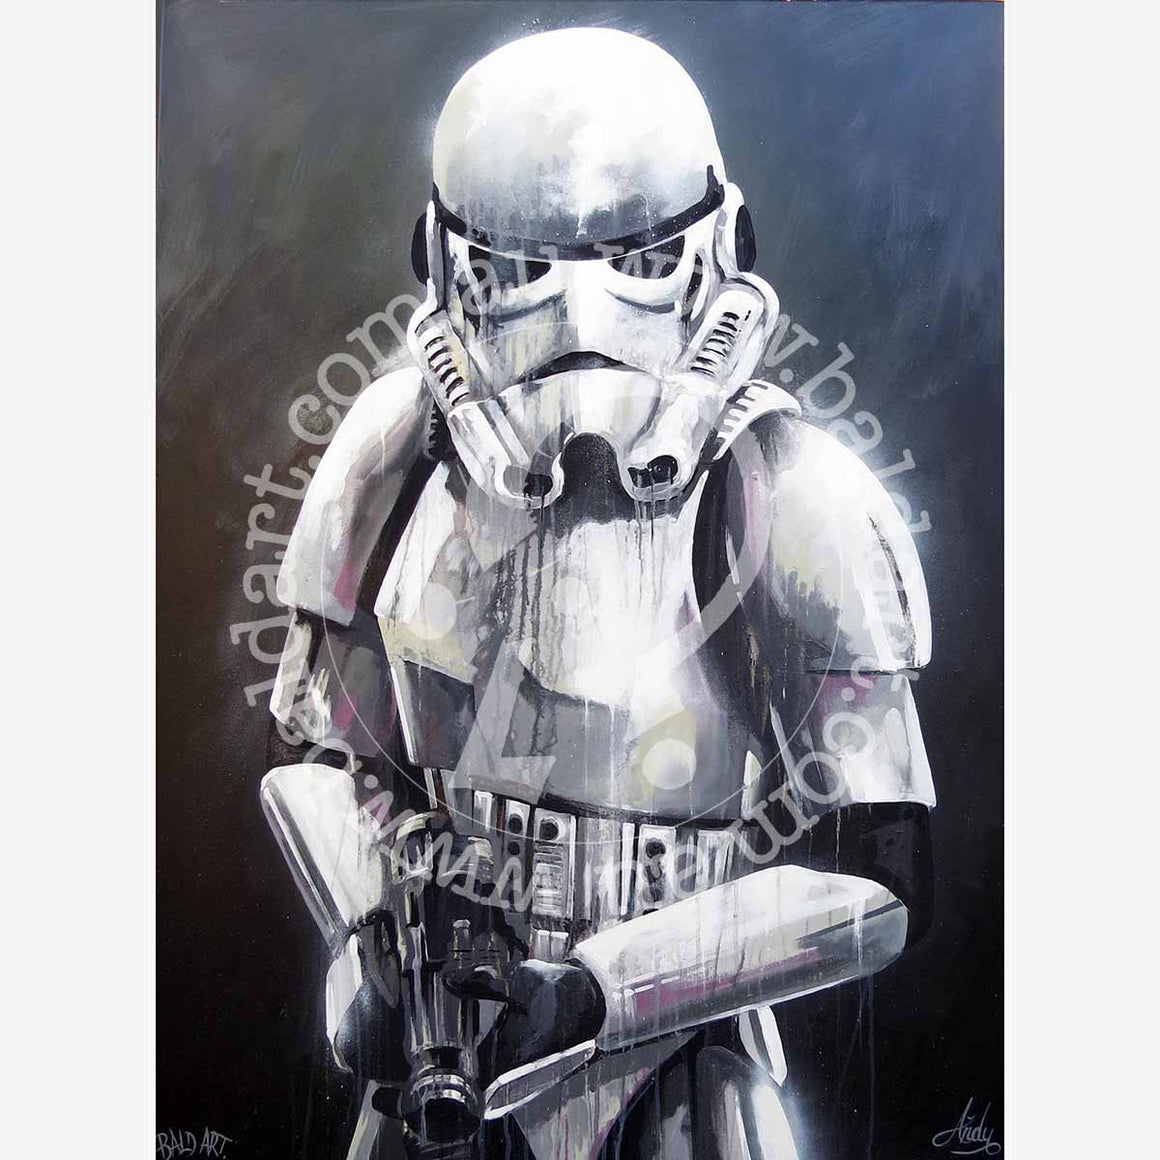 star wars stormtrooper artwork by andy baker of bald art